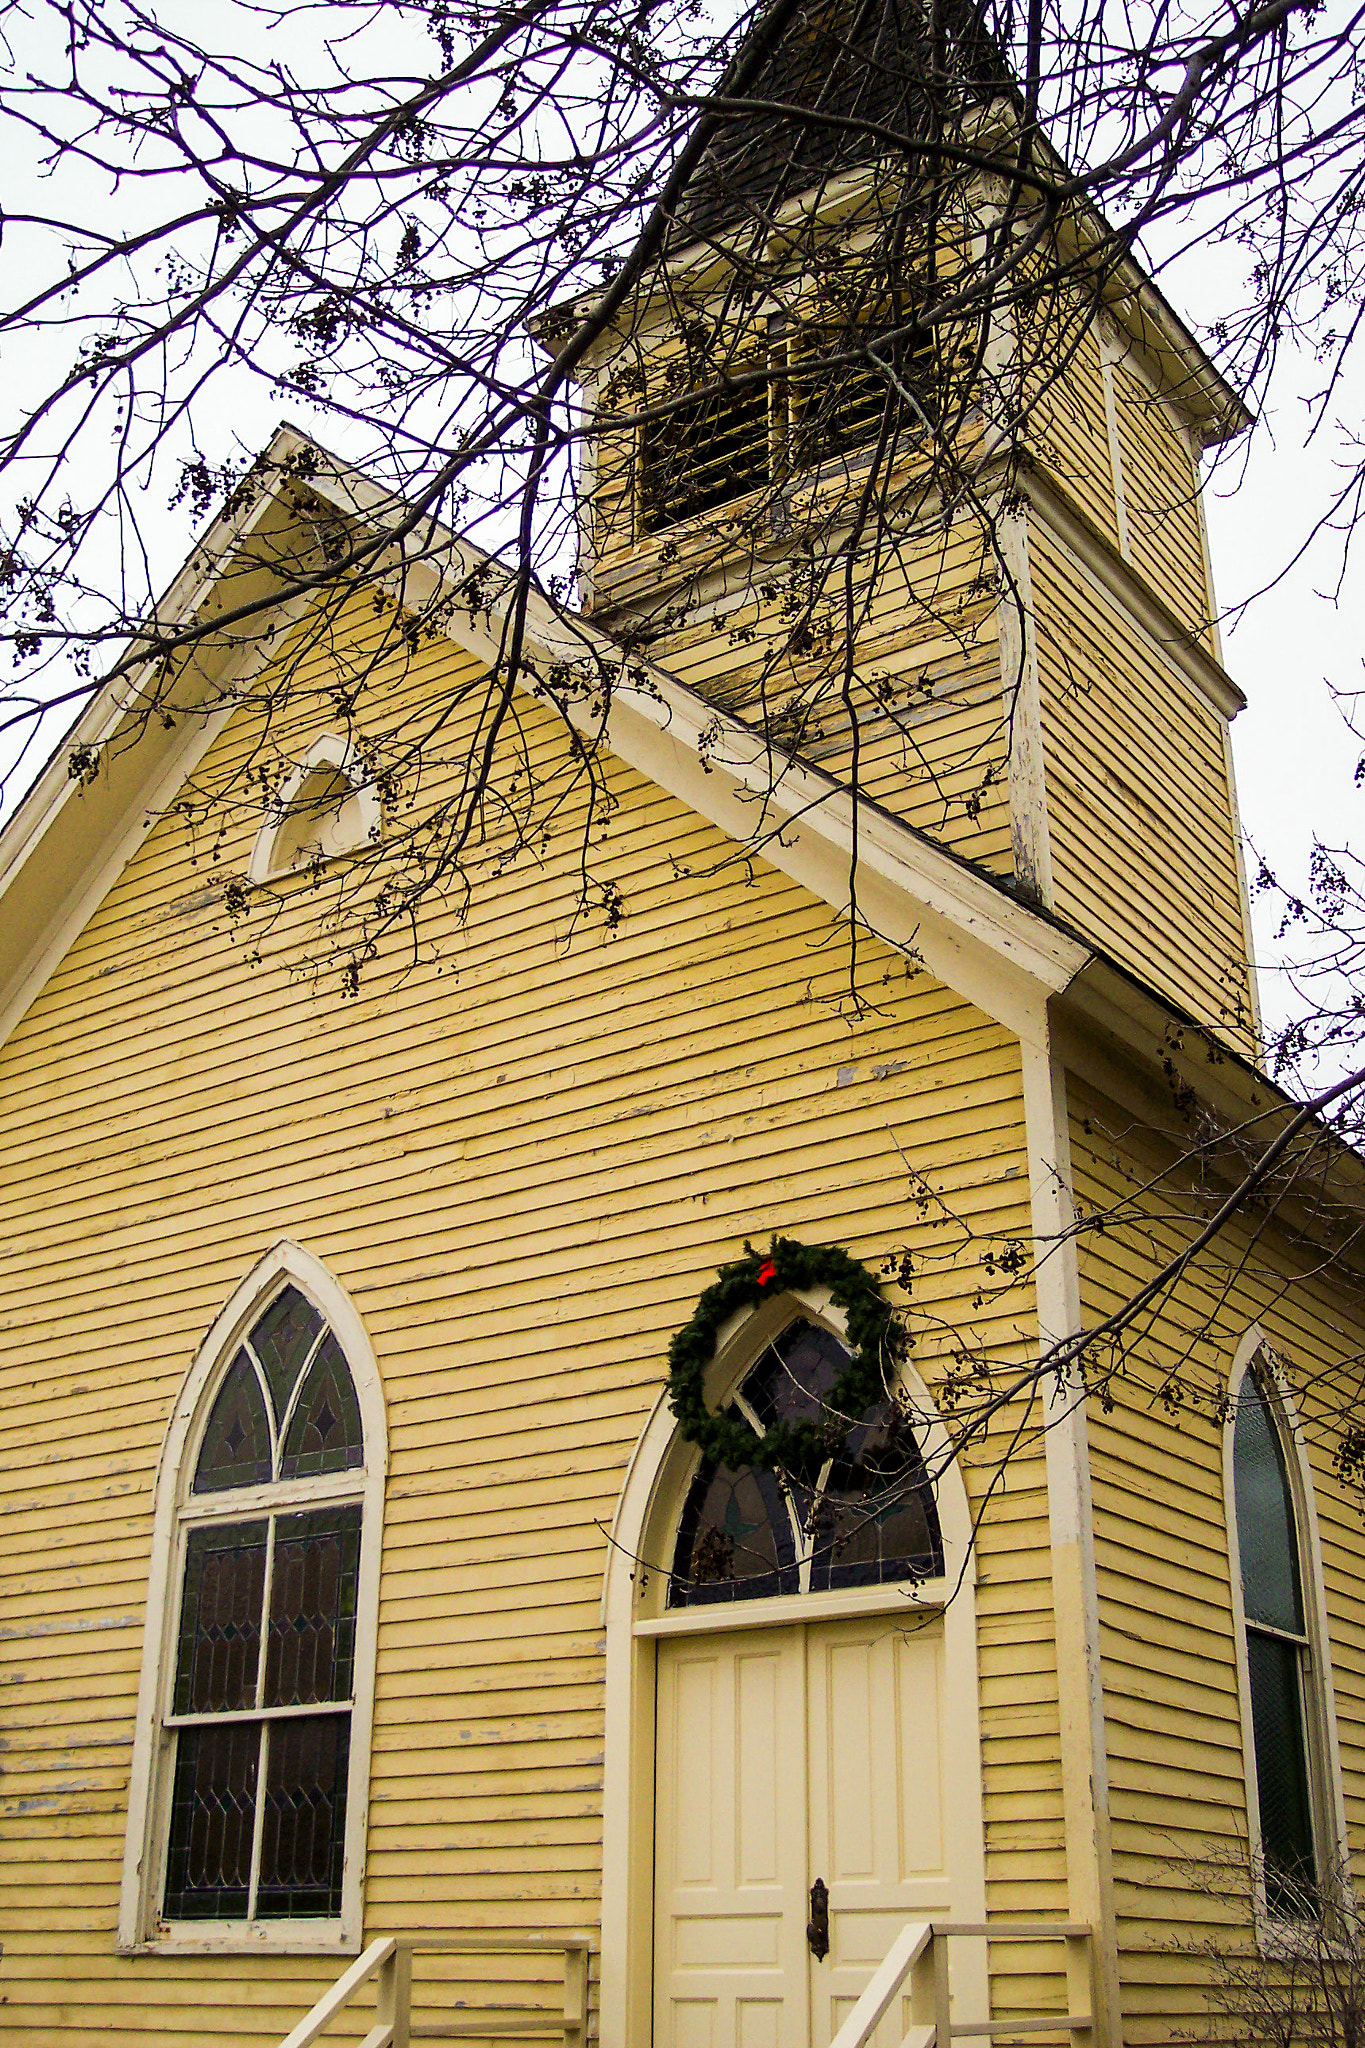 Kodak DX4530 ZOOM DIGITAL CAMERA sample photo. Old yellow church with wreath photography